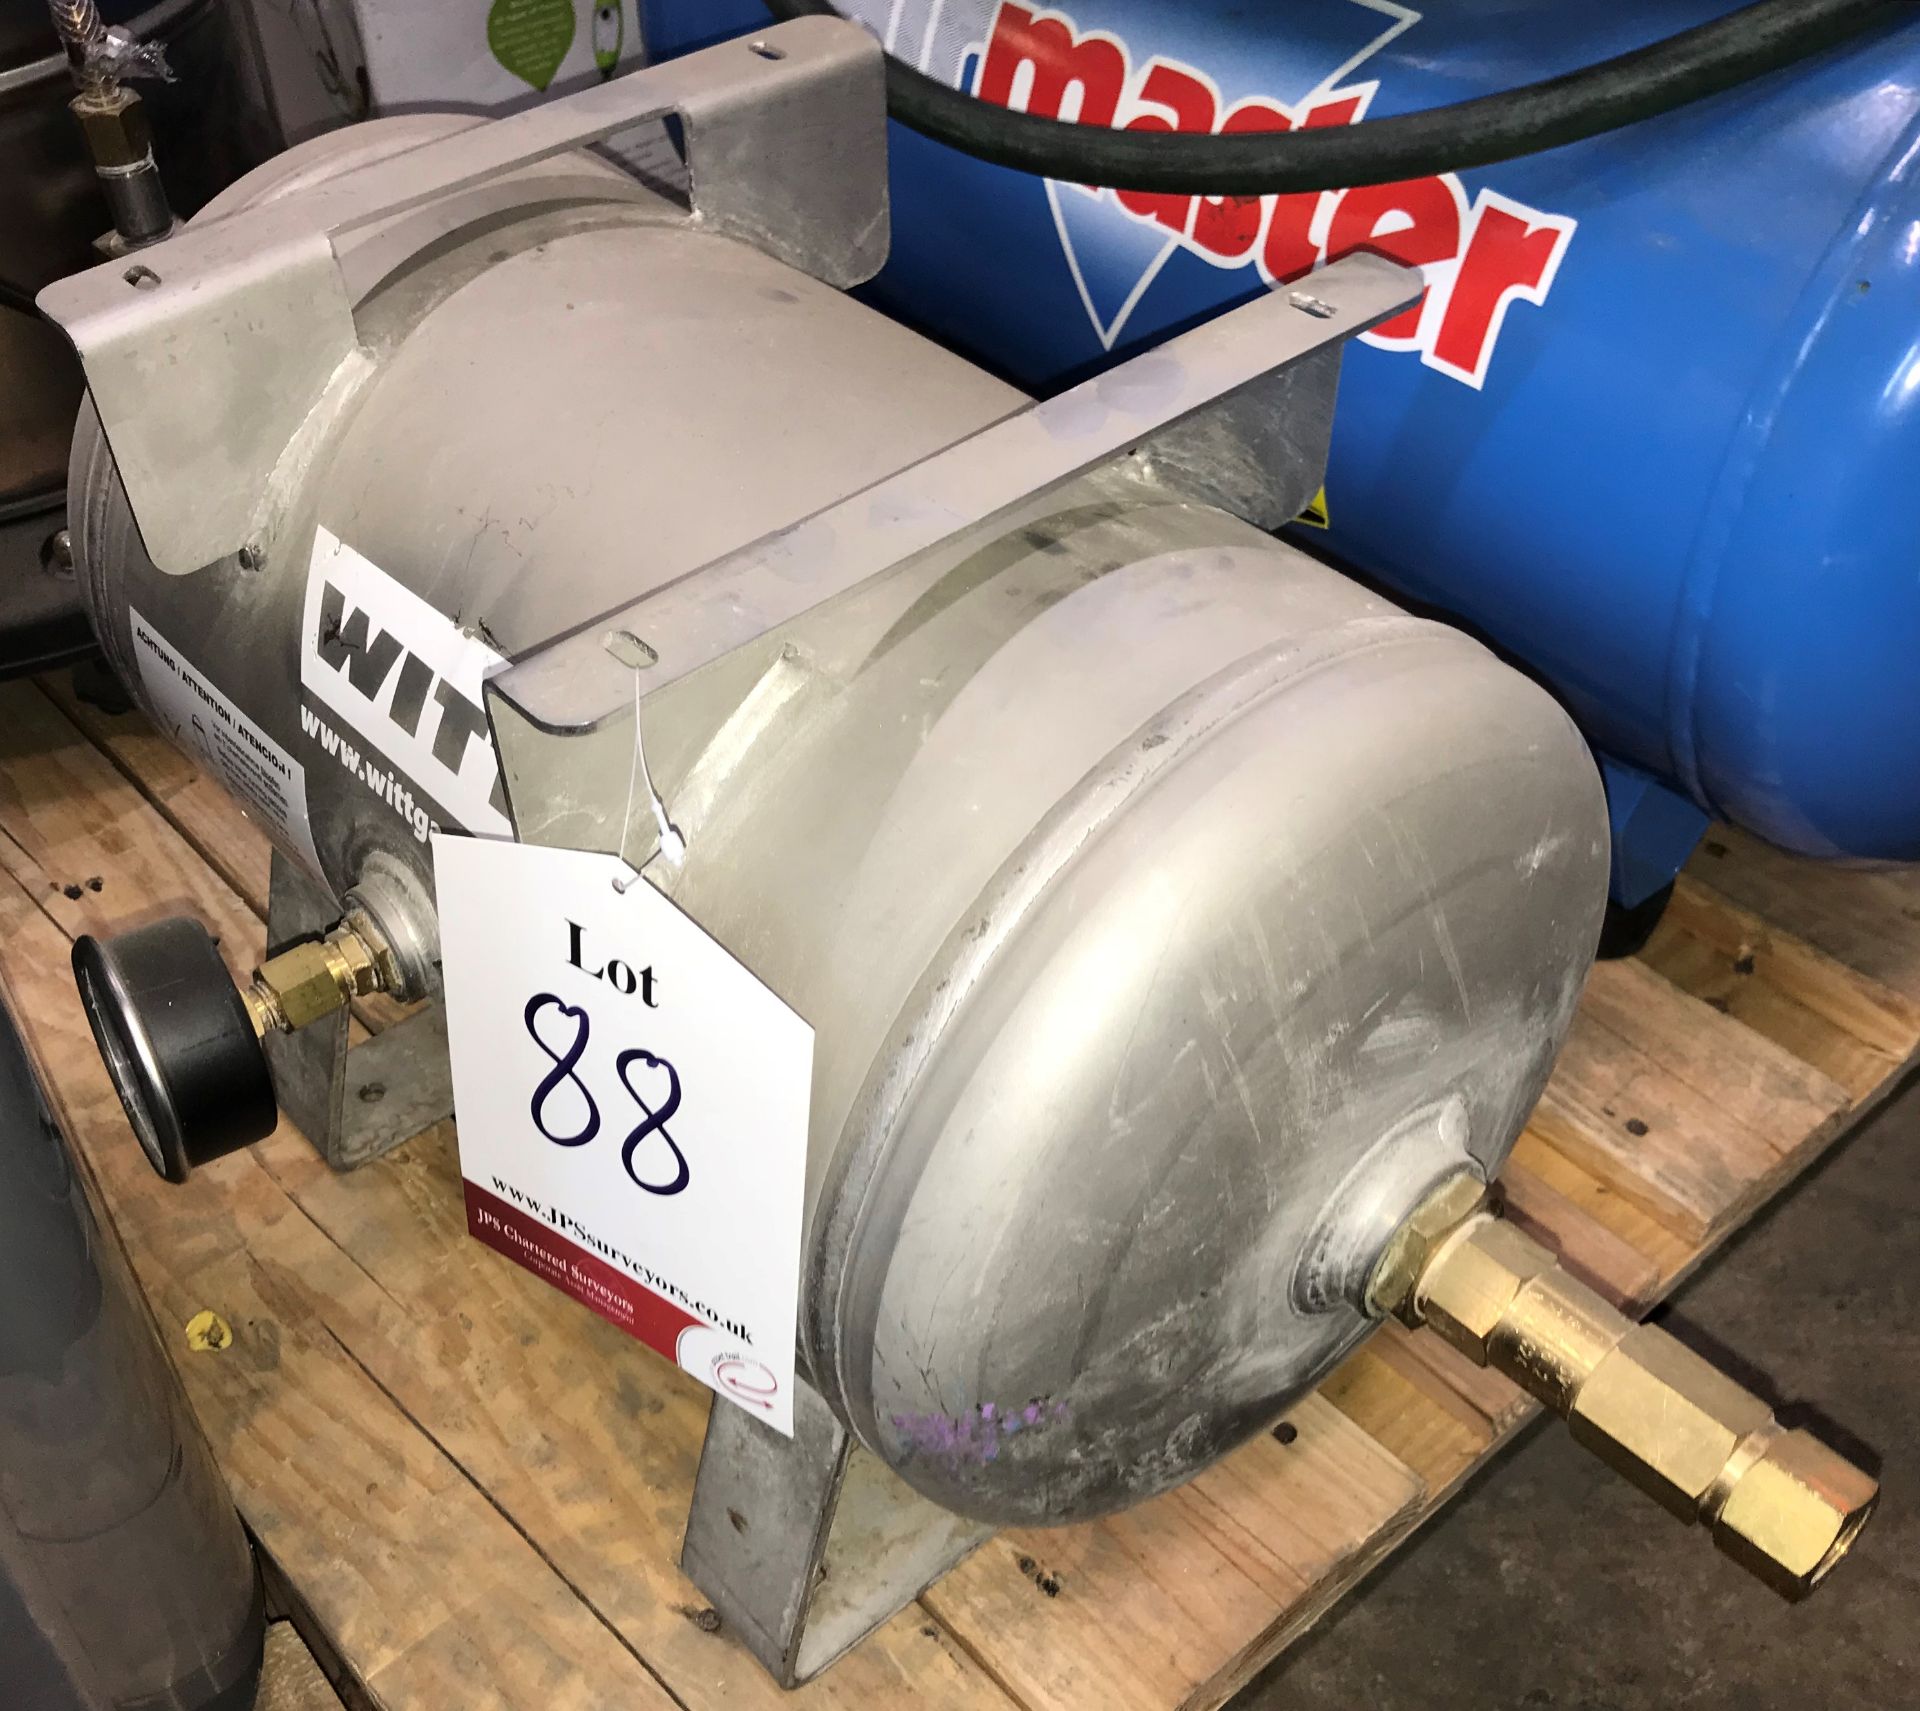 Witt 20L Gas Compressor